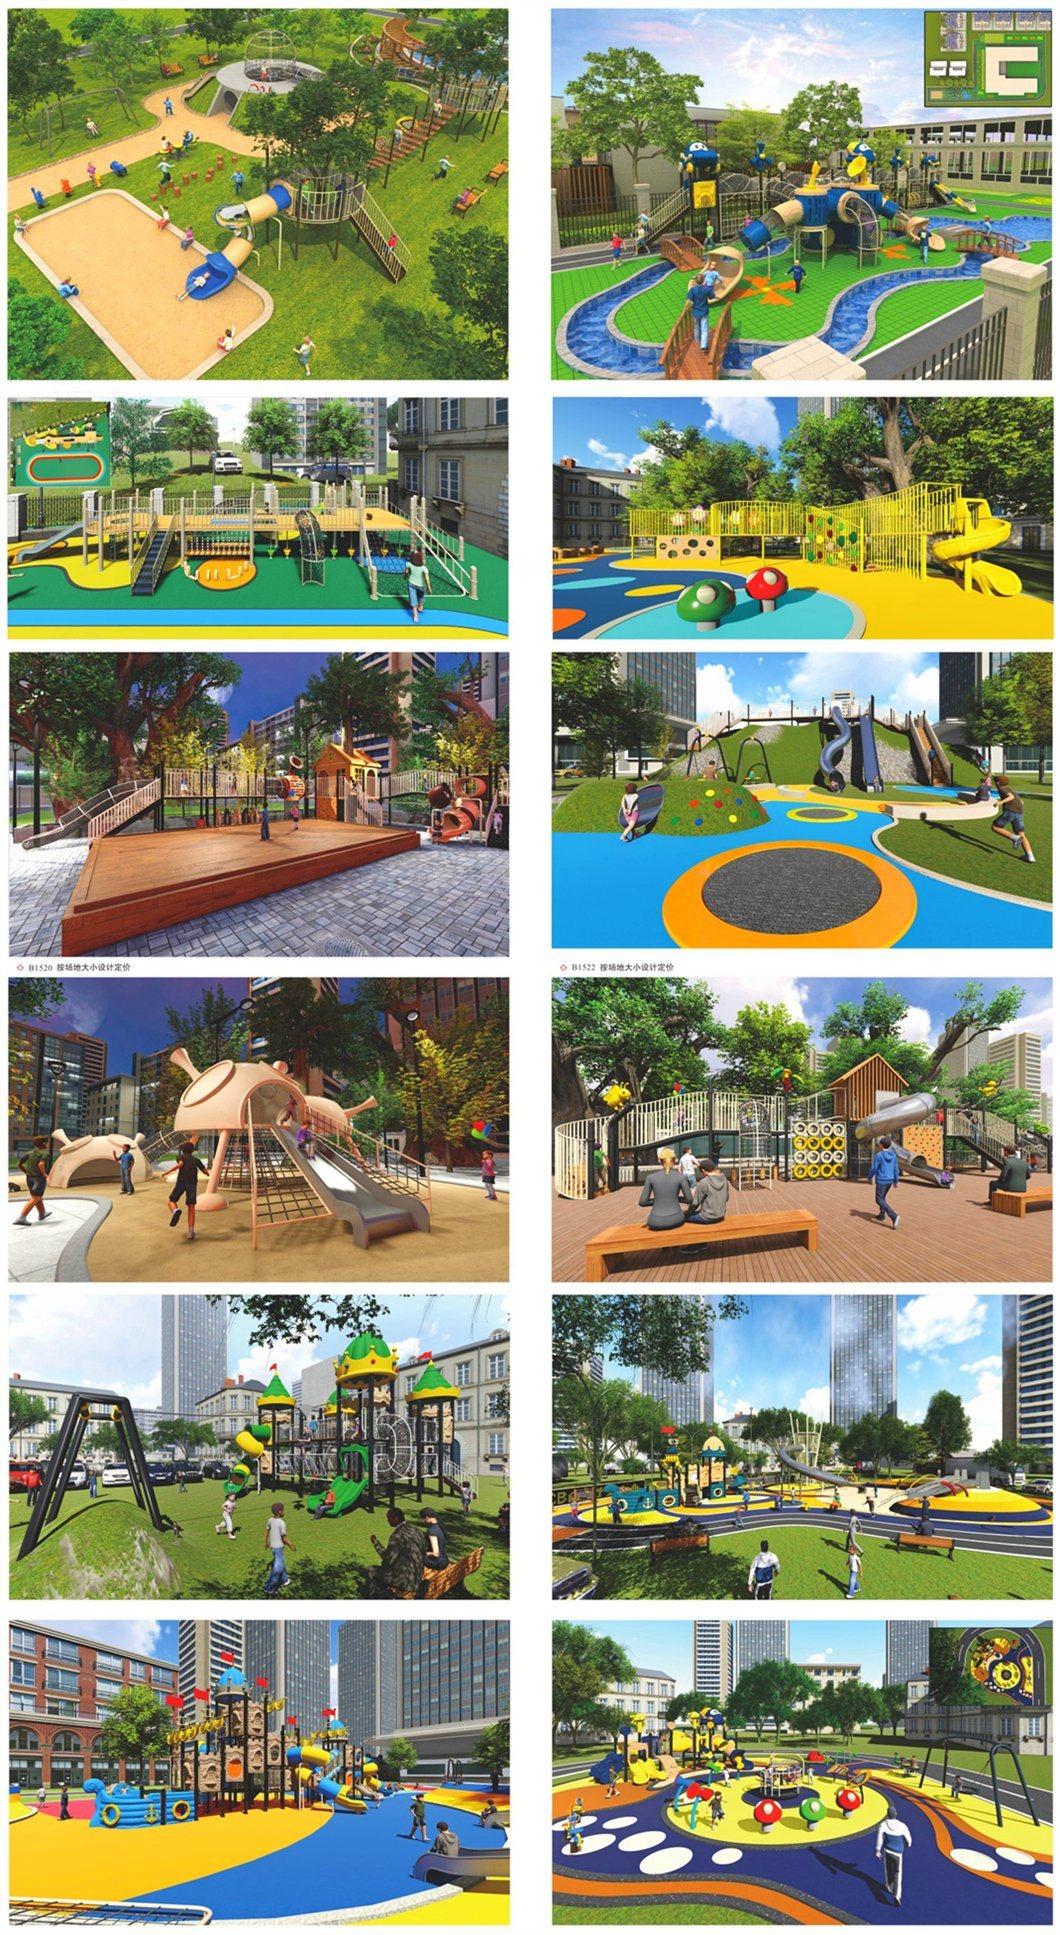 Customized Park Playground Equipment Outdoor Amusement Park Stainless Steel Slides